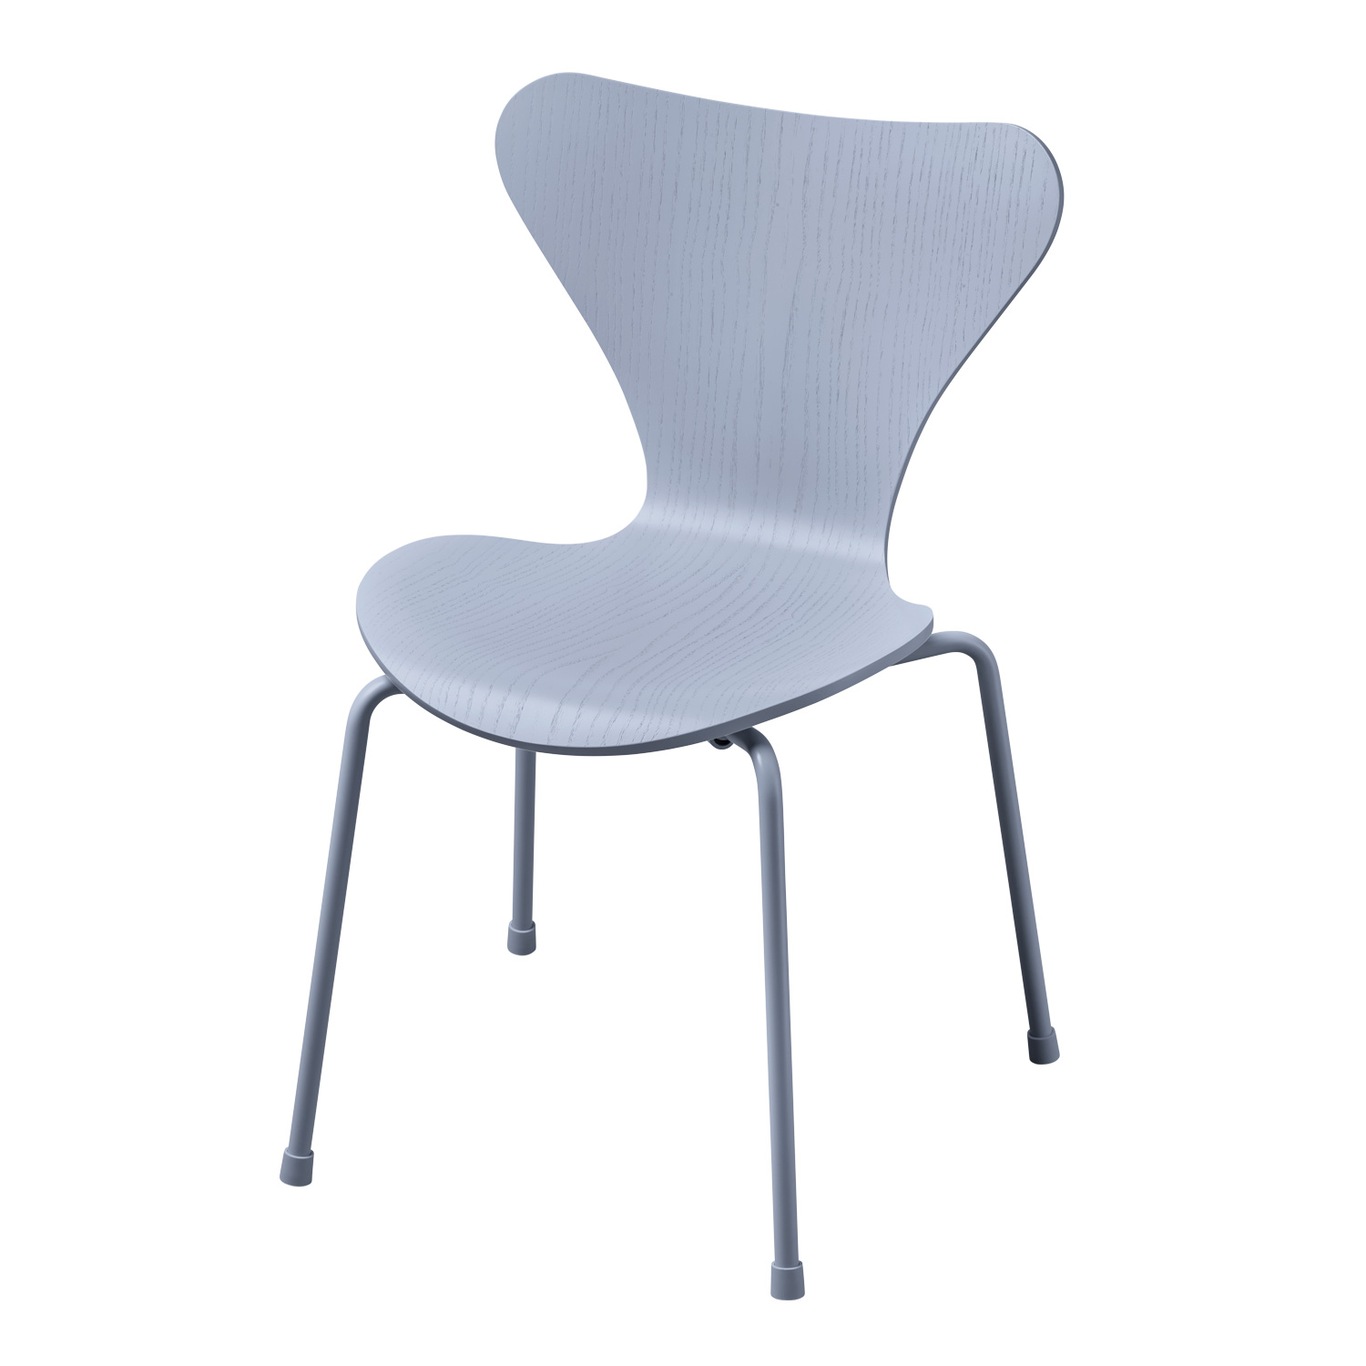 Series 7 Children's Chair, Lavender blue